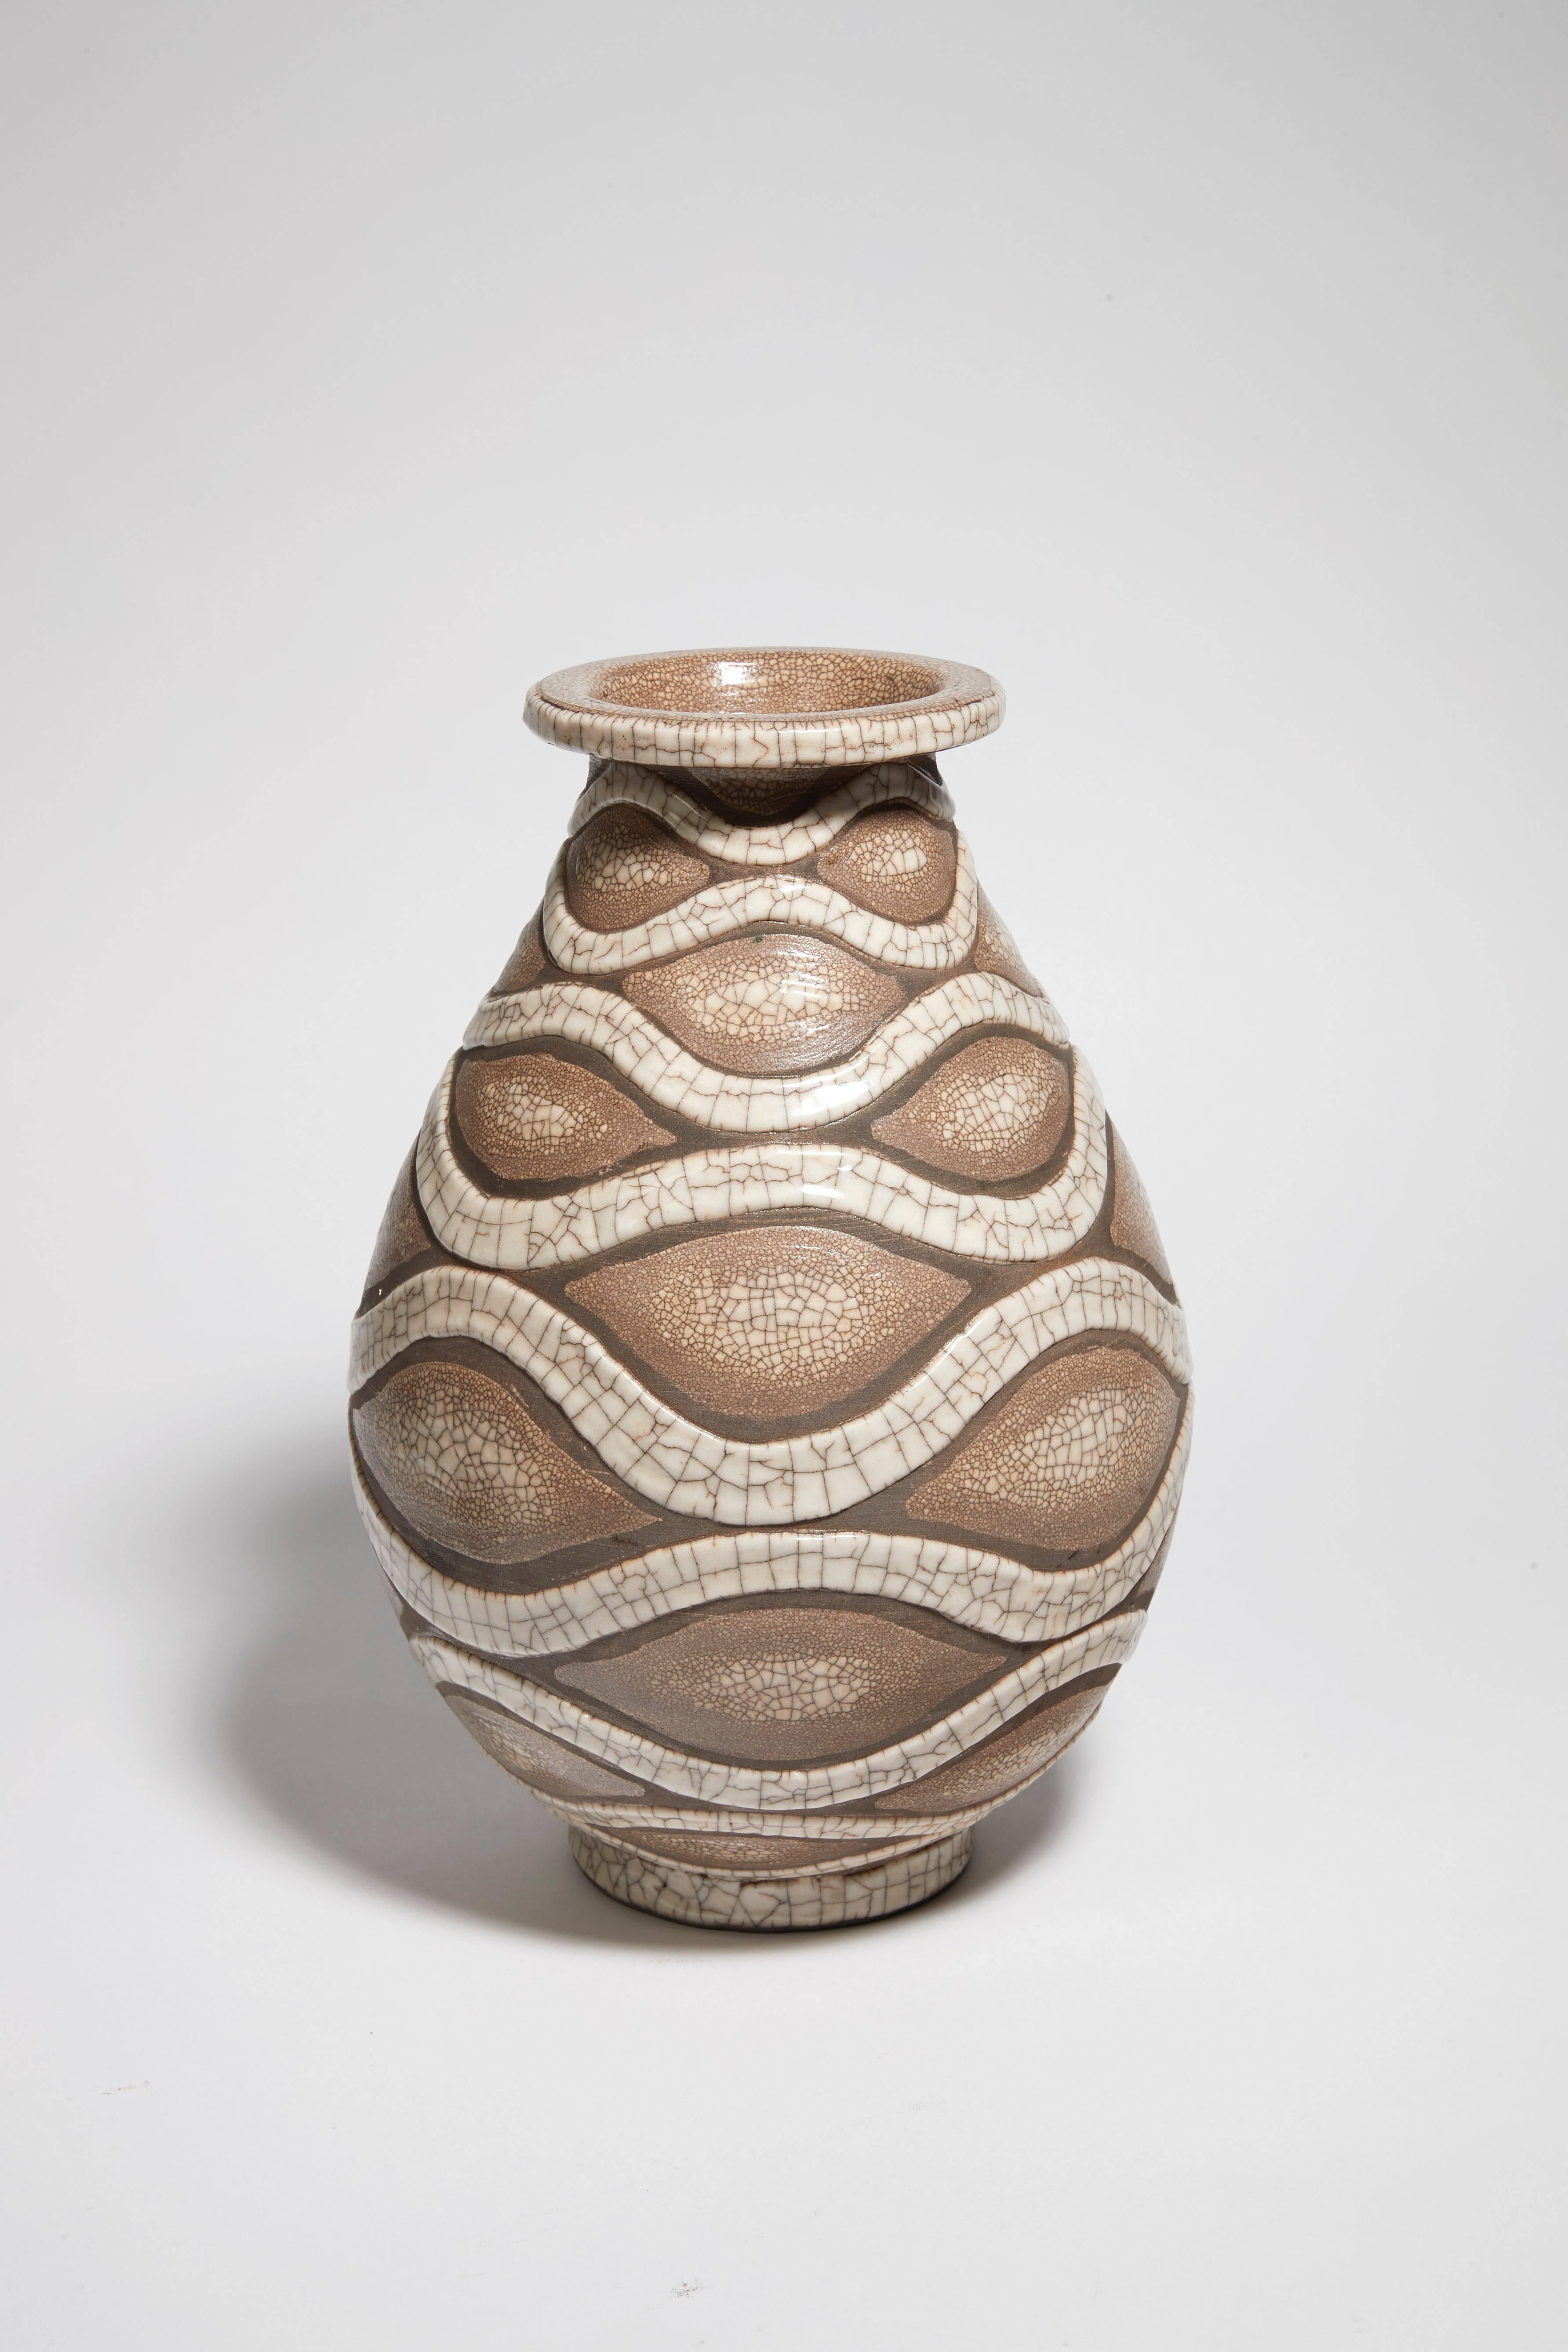 Ovoid-shaped earthenware vase, decorated with enamelled cracked white interlacing’s on a grey snakeskin base. Signature 'RB' under the base.